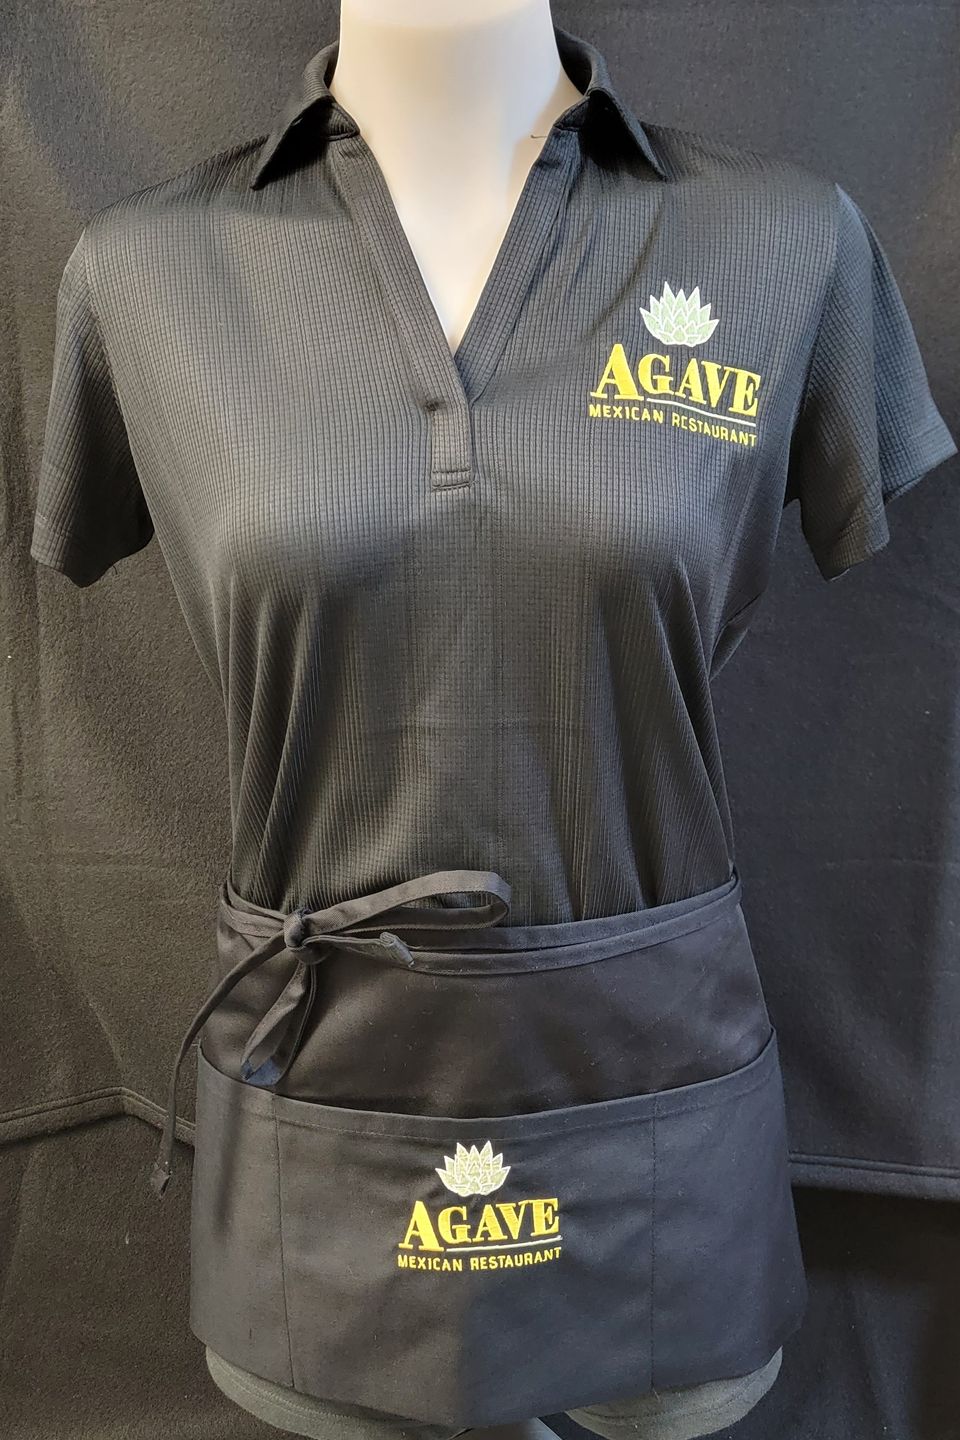 Heat Transfer Vinyl example - company logo on server uniform and apron by SaRi's Creations